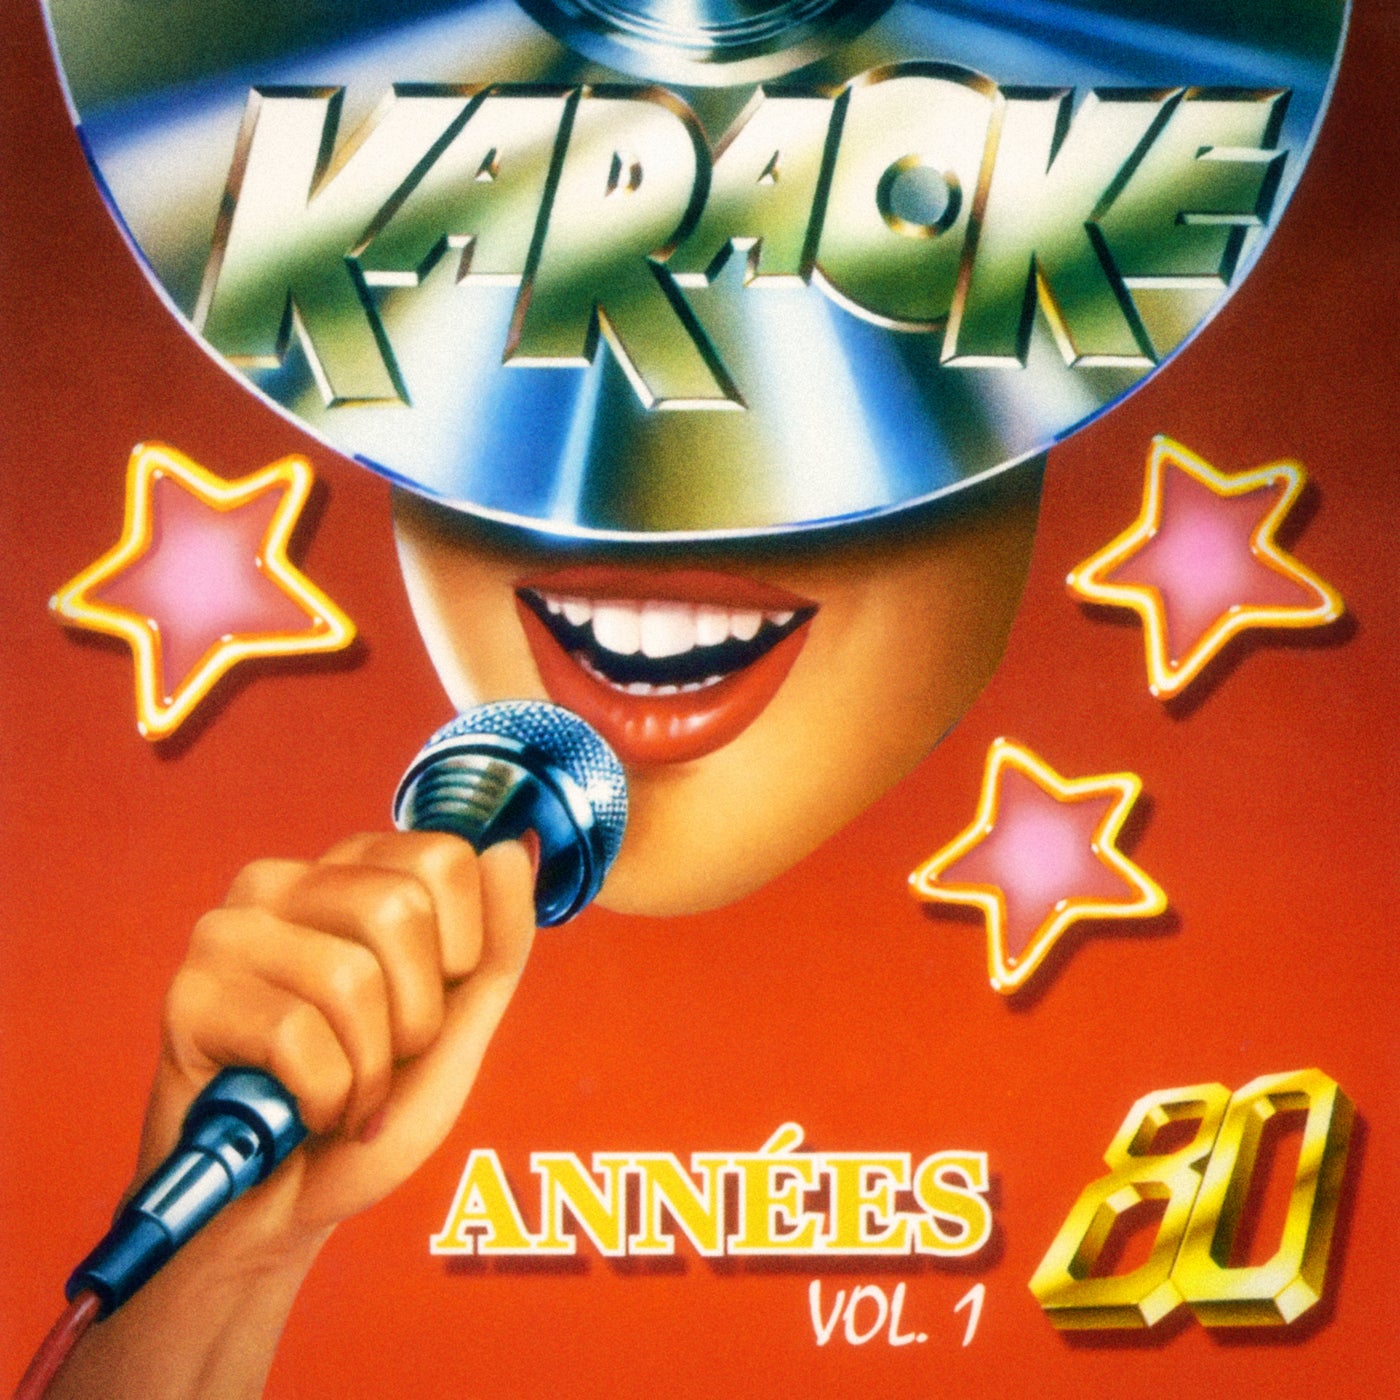 Digital Orchestra - Karaoké années 80 Vol. 1: lyrics and songs